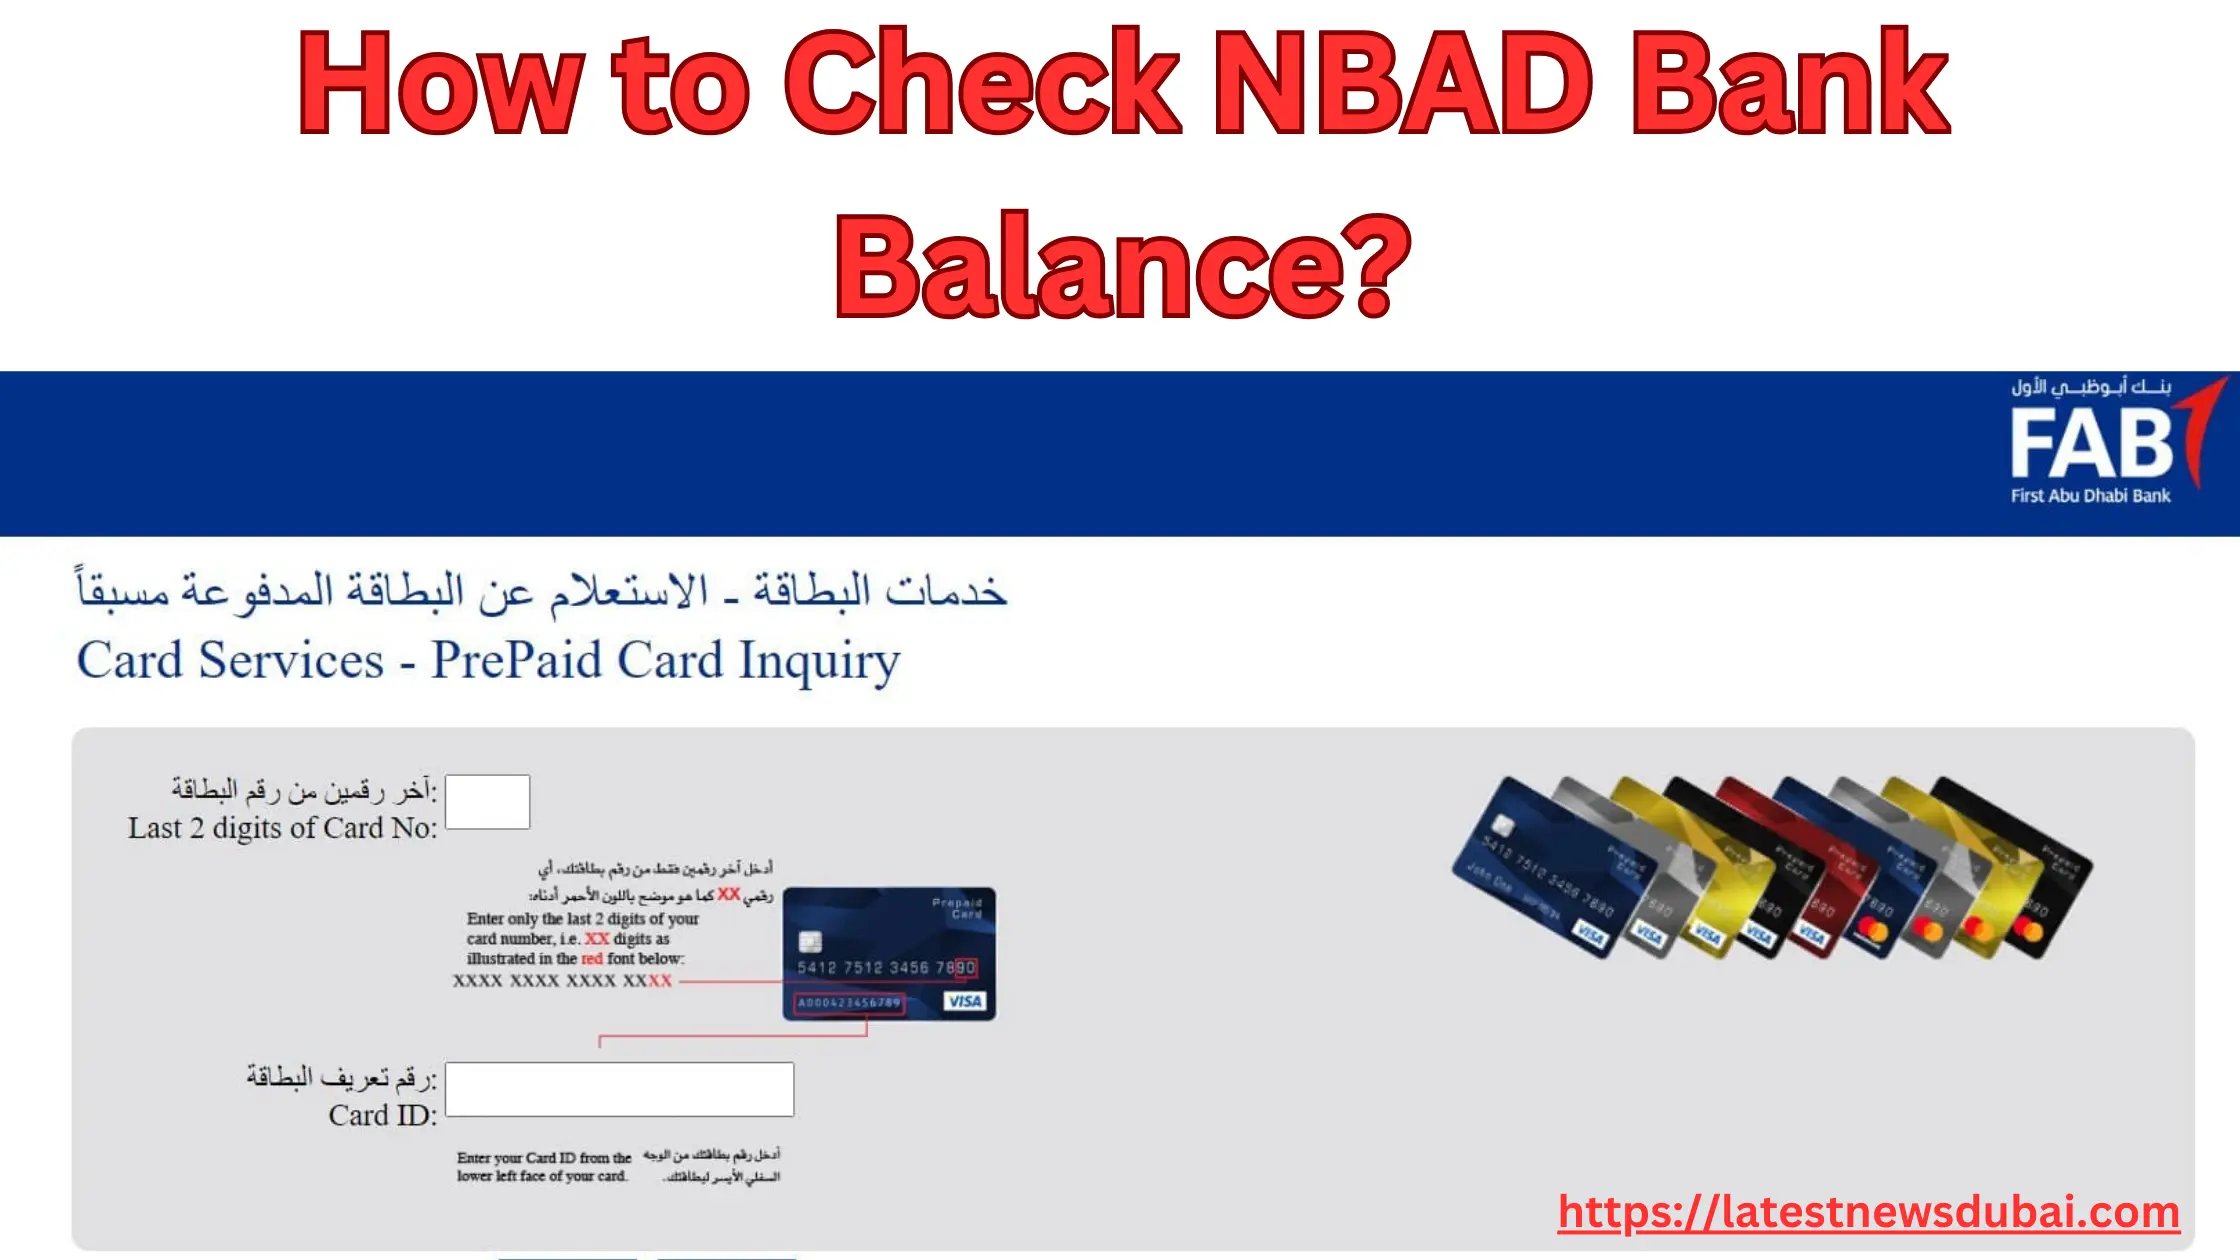 NBAD Bank Balance